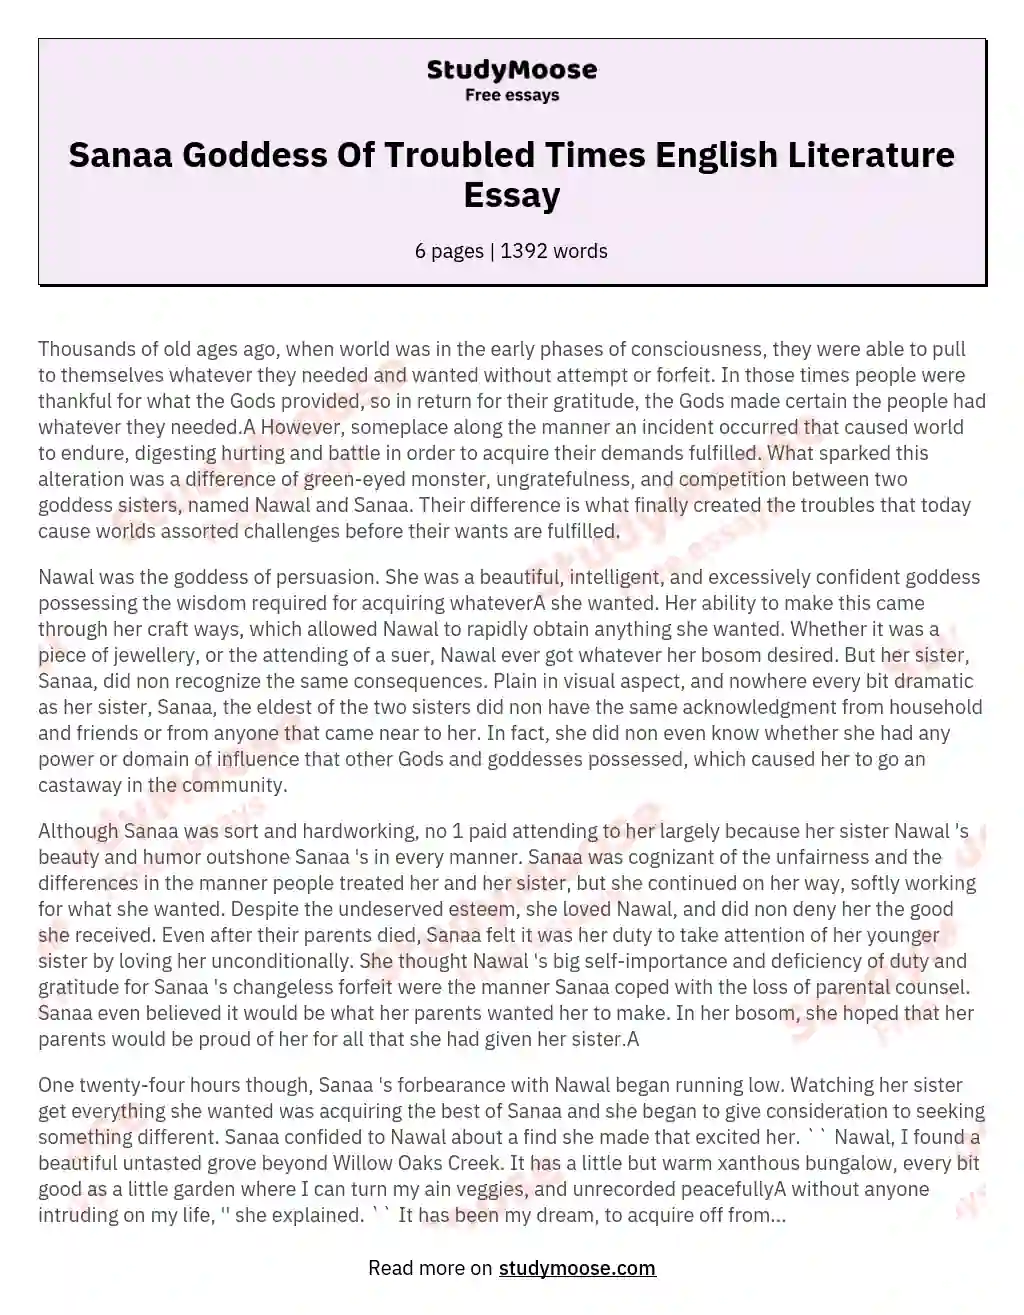 Sanaa Goddess Of Troubled Times English Literature Essay essay